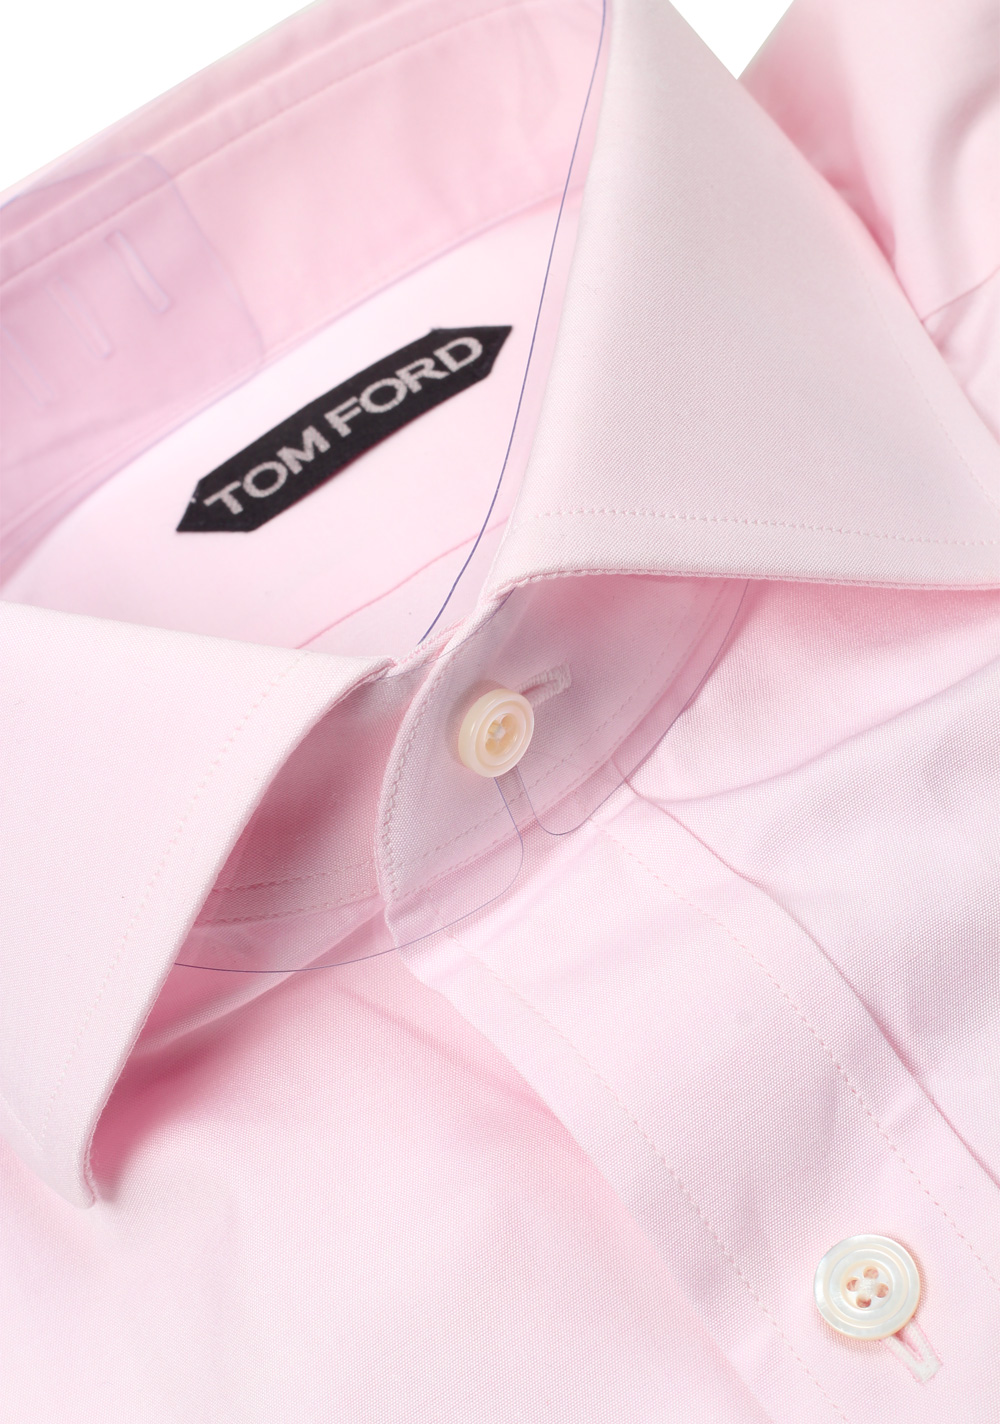 TOM FORD Solid Pink Dress Shirt Size 44 / 17,5 U.S. | Costume Limité